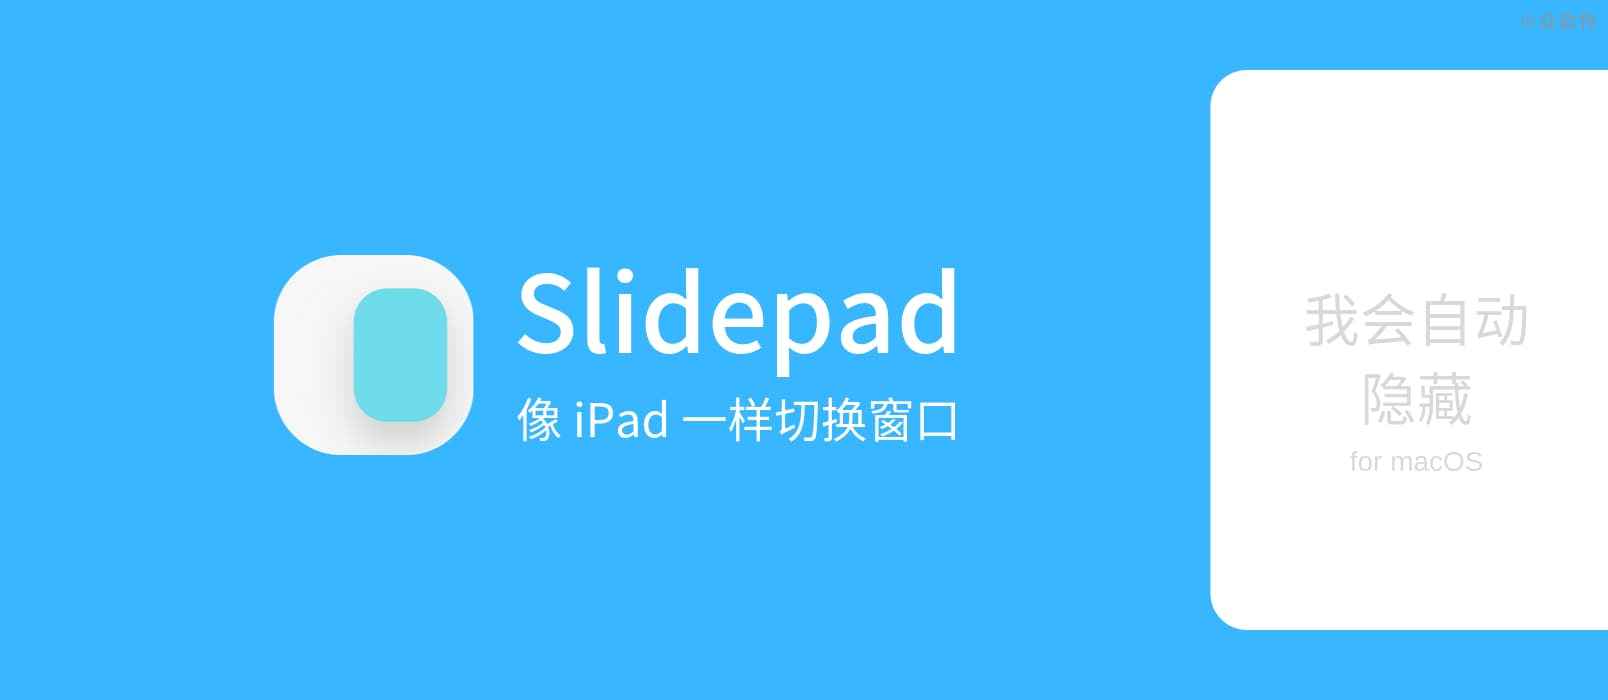 SlidePad – 能吸附在屏幕右侧，自动隐藏的迷你浏览器，像 iPad 一样切换窗口[macOS]